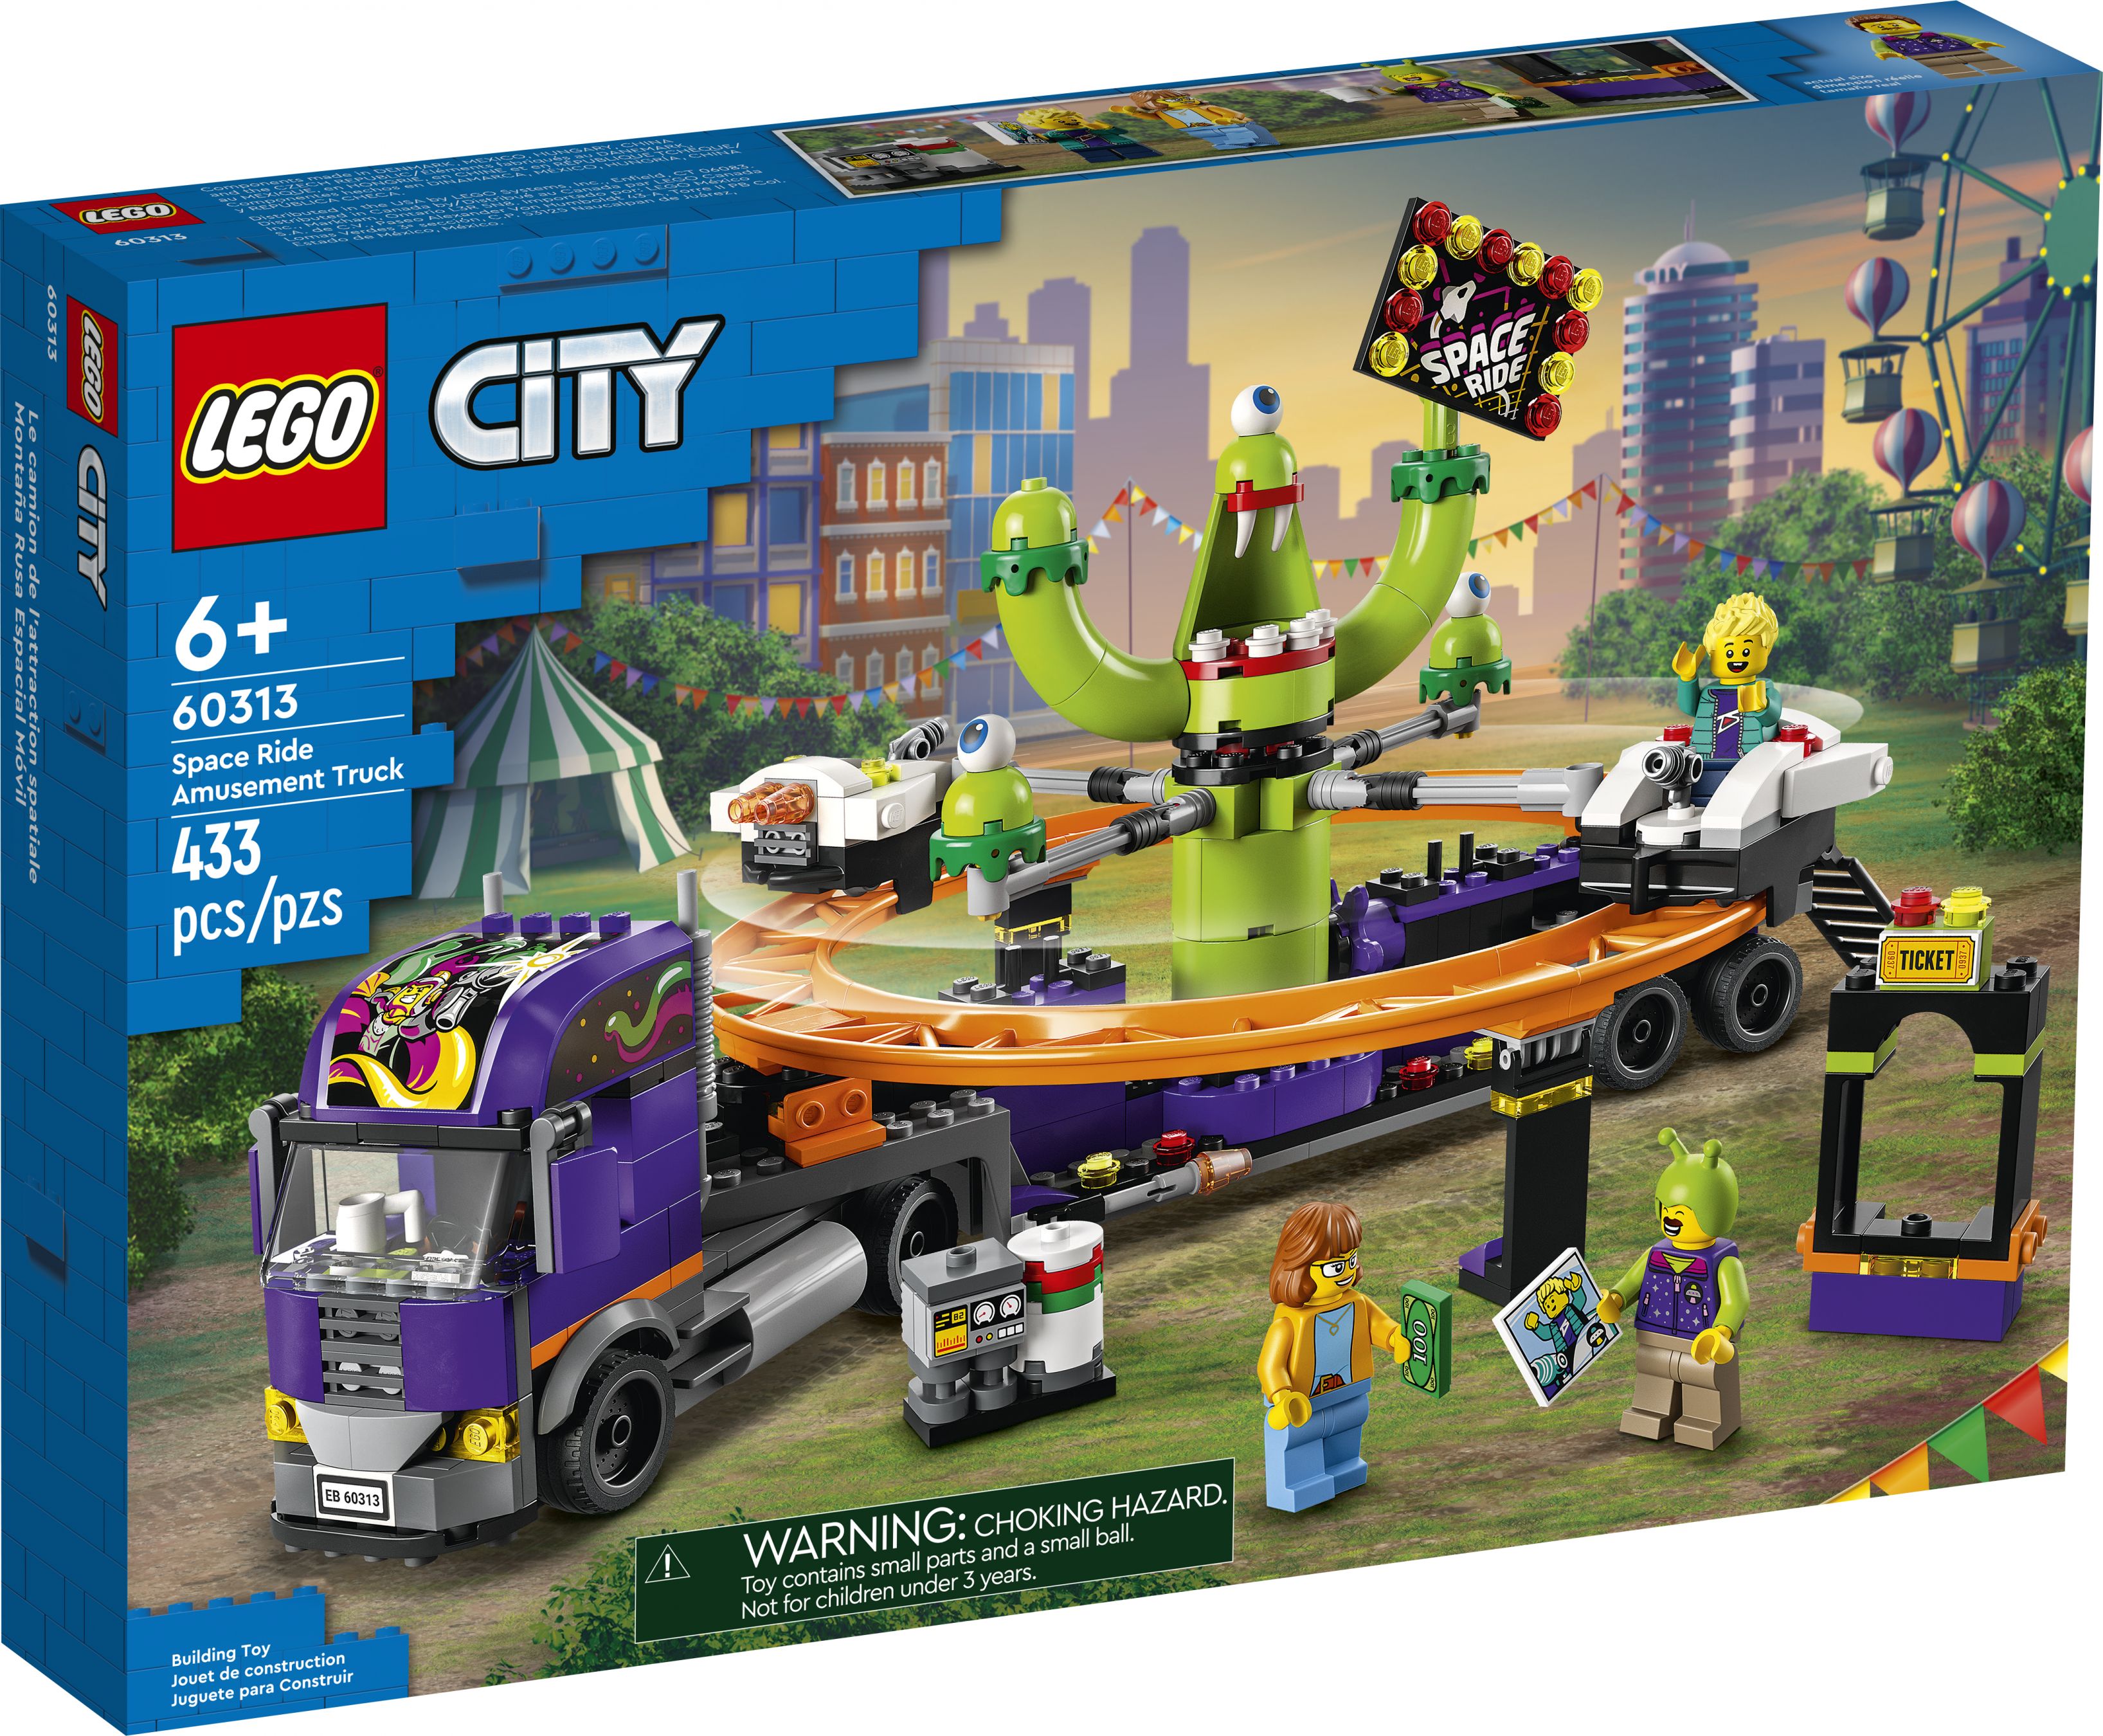 LEGO City 60313 LKW mit Weltraumkarussell LEGO_60313_Box1_V39.jpg